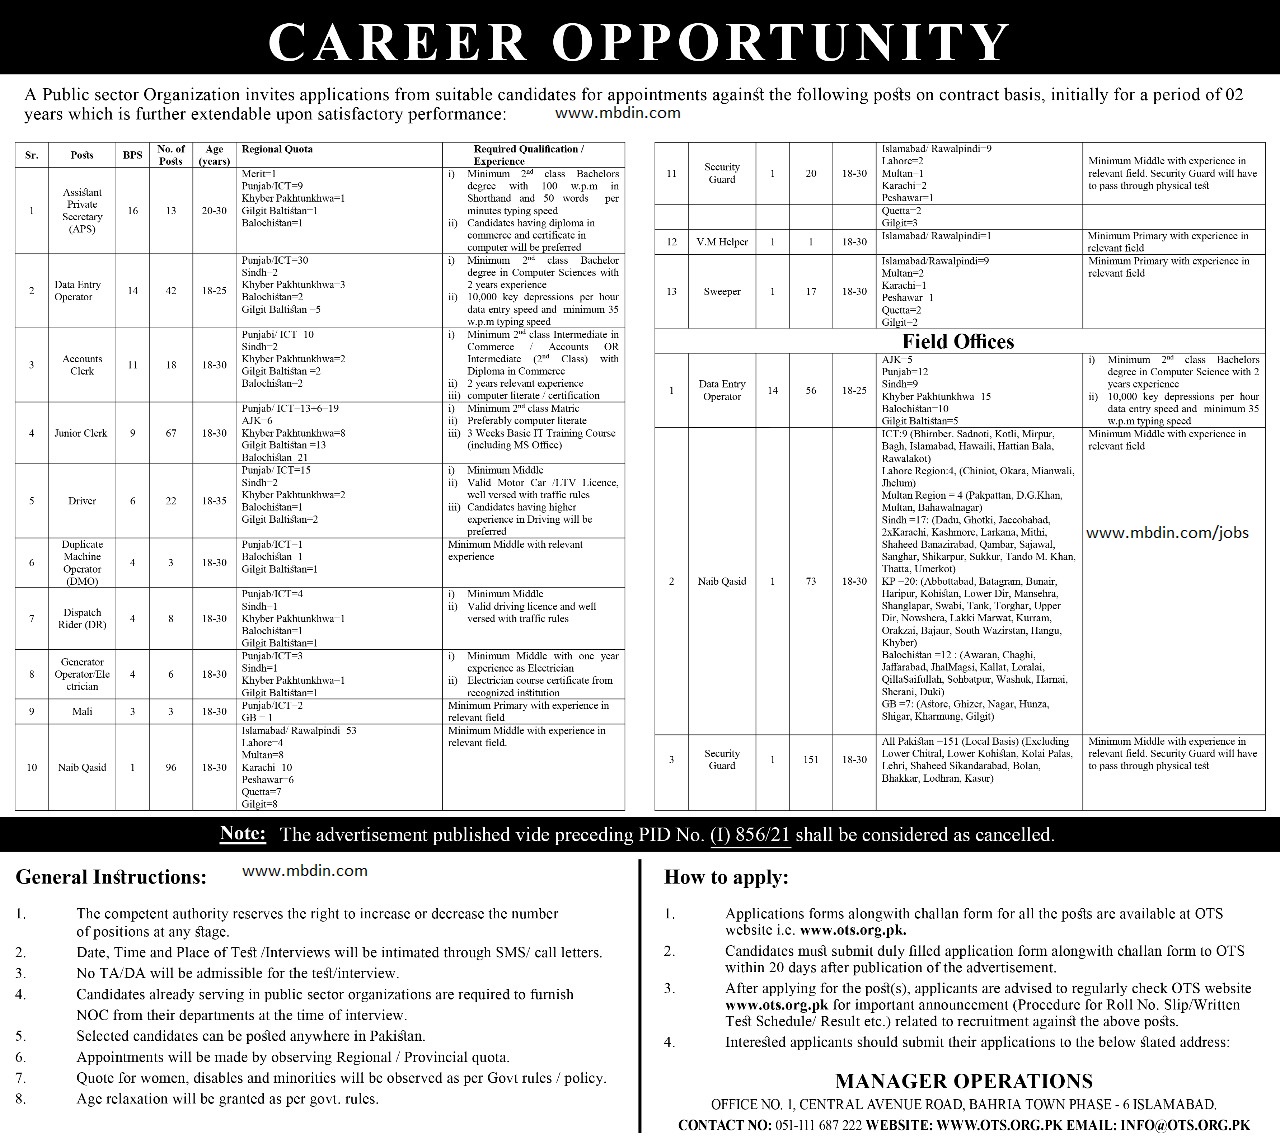 Government Jobs in Pakistan Public Sector Organization via OTS